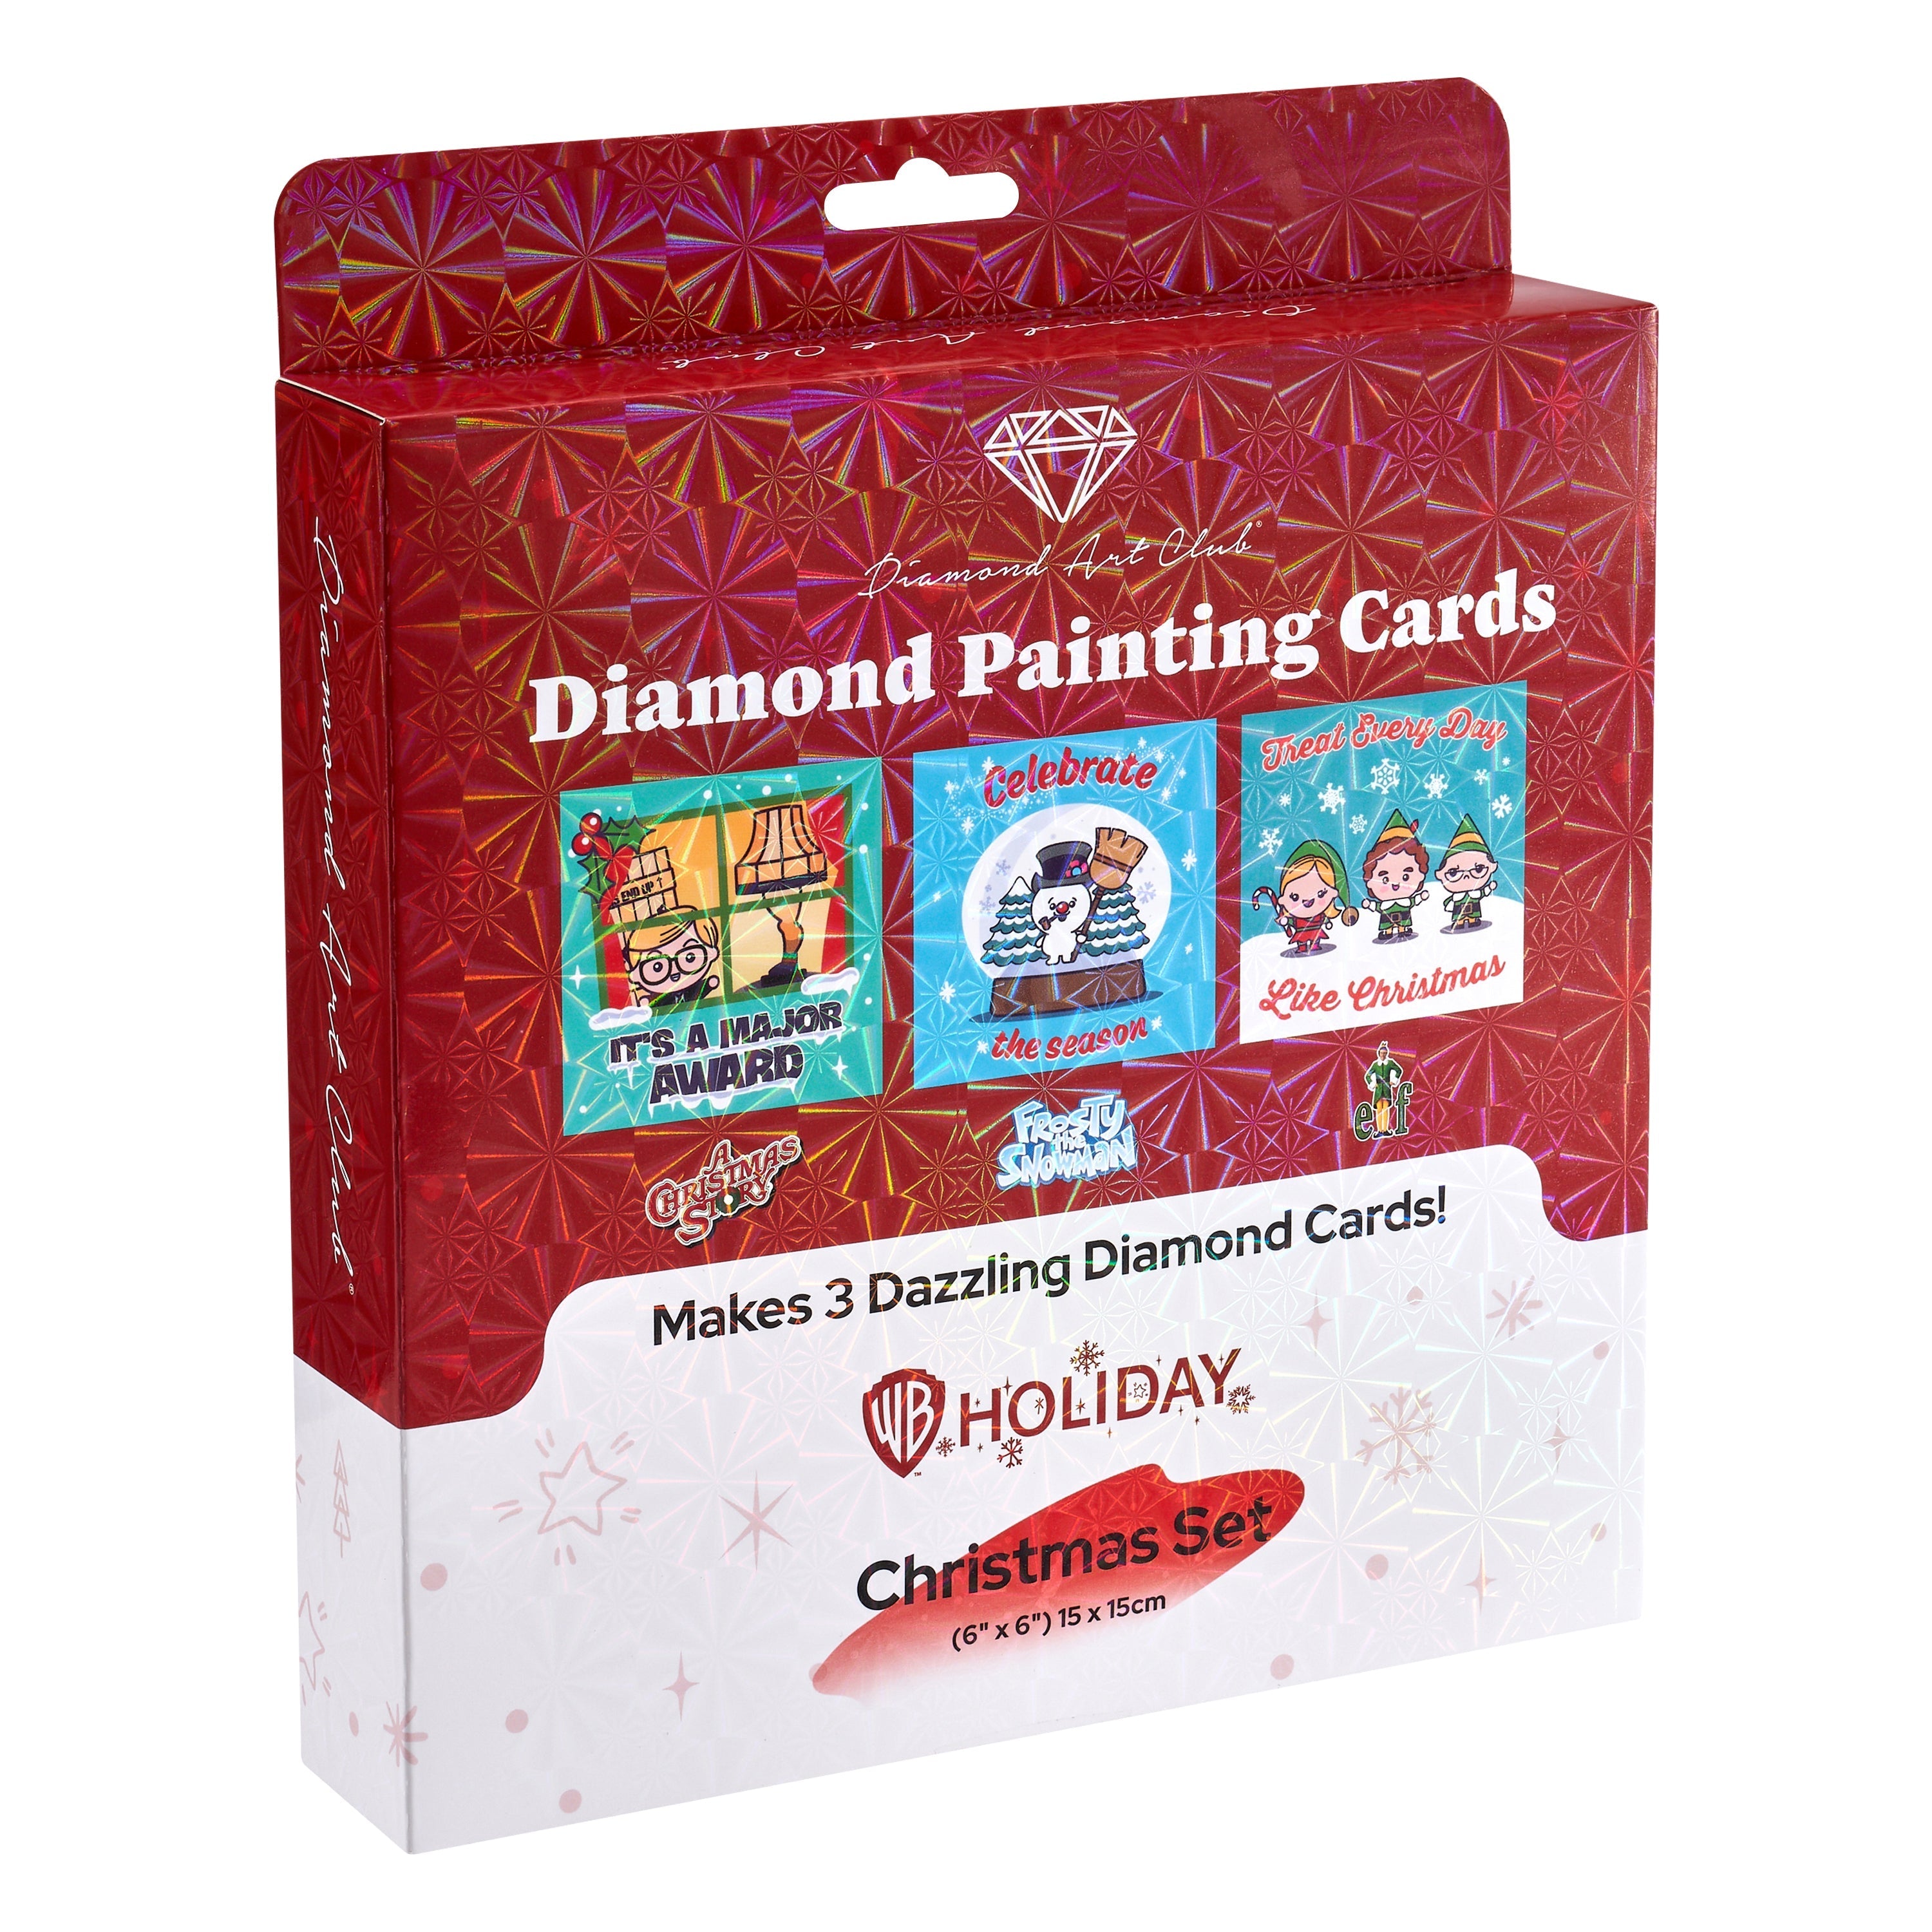 Treat Me Diamond Art Christmas Cards Diamond Painting Three-dimensional Christmas Diamond Painting Cards for Gift(8 Pack)